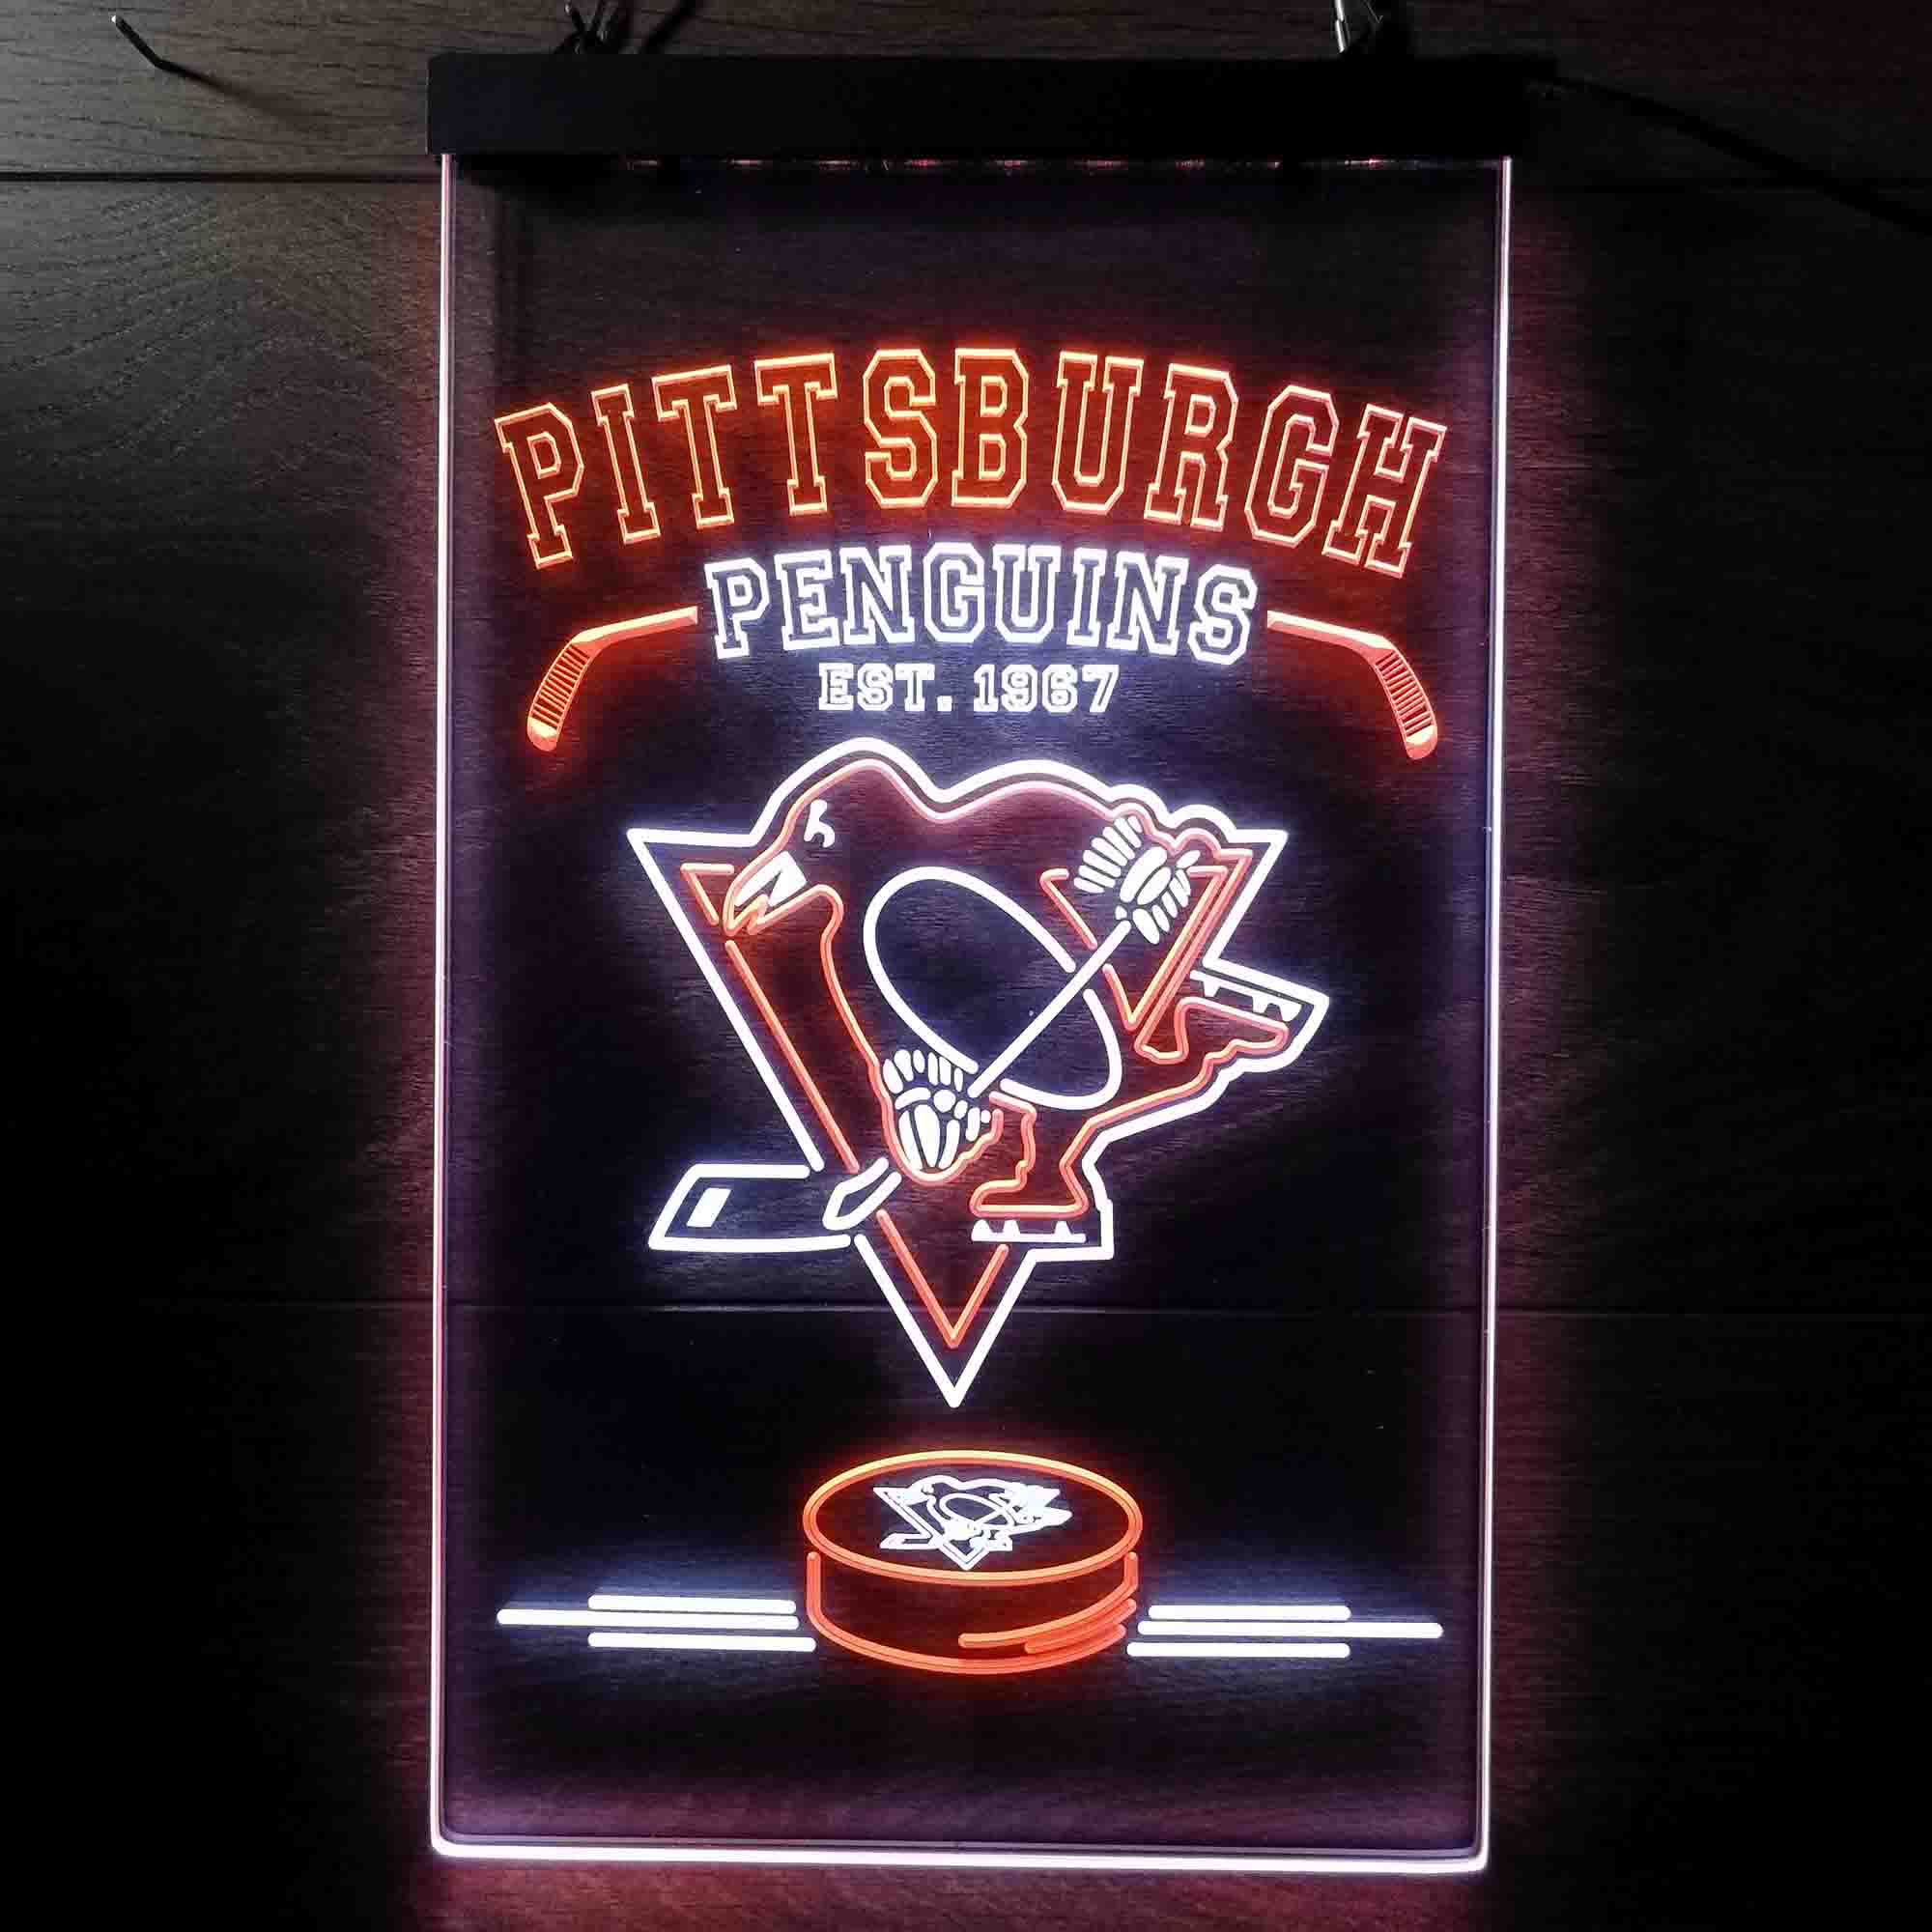 Personalized Custom Your Sport Team Penguins Est. 1967 Dual Color LED Neon Sign ProLedSign